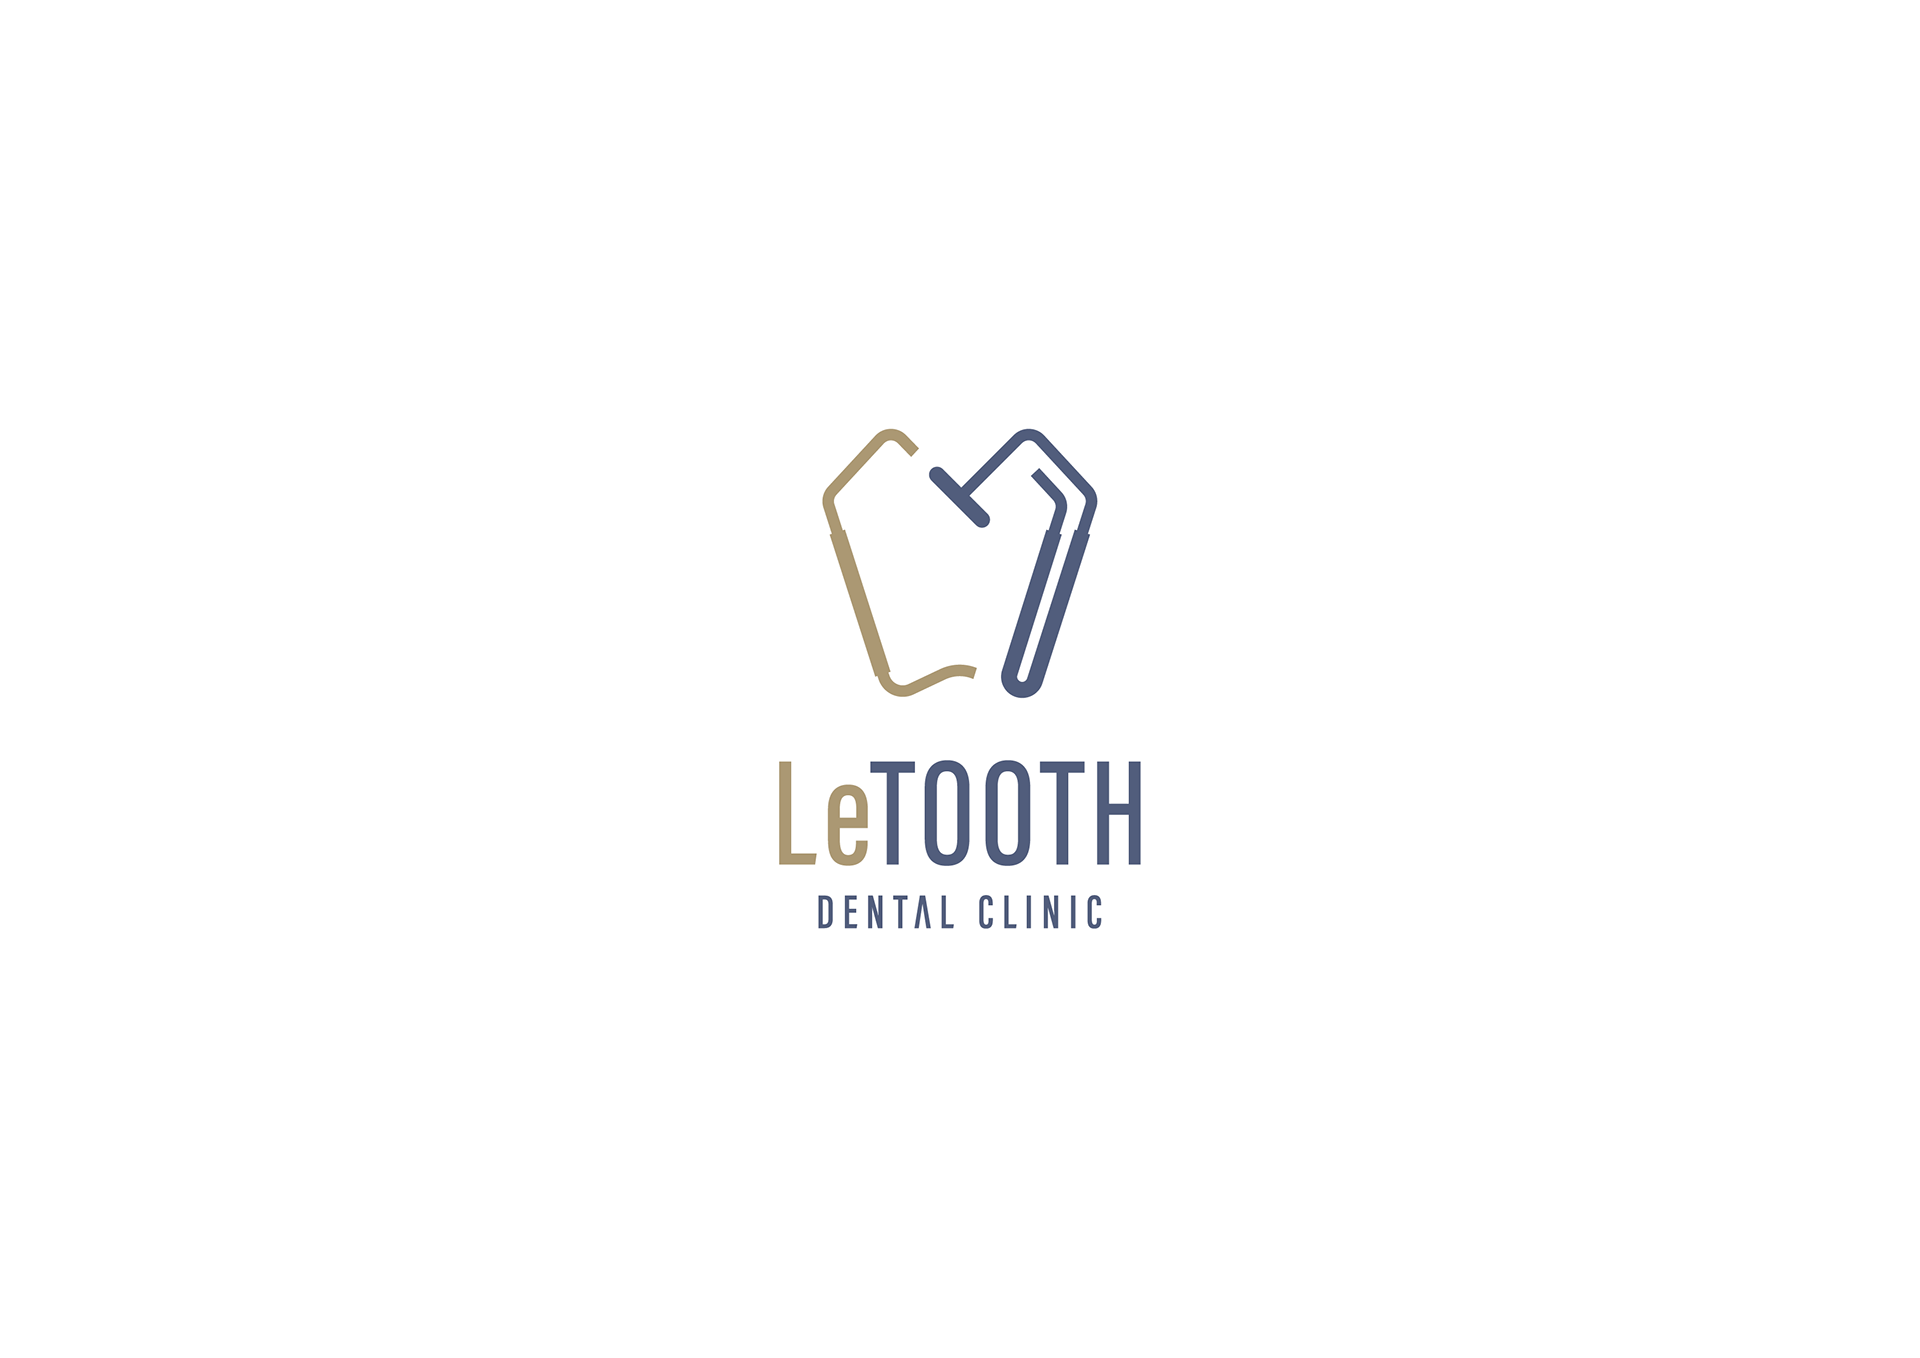 LETOOTH ( Dental Clinic )